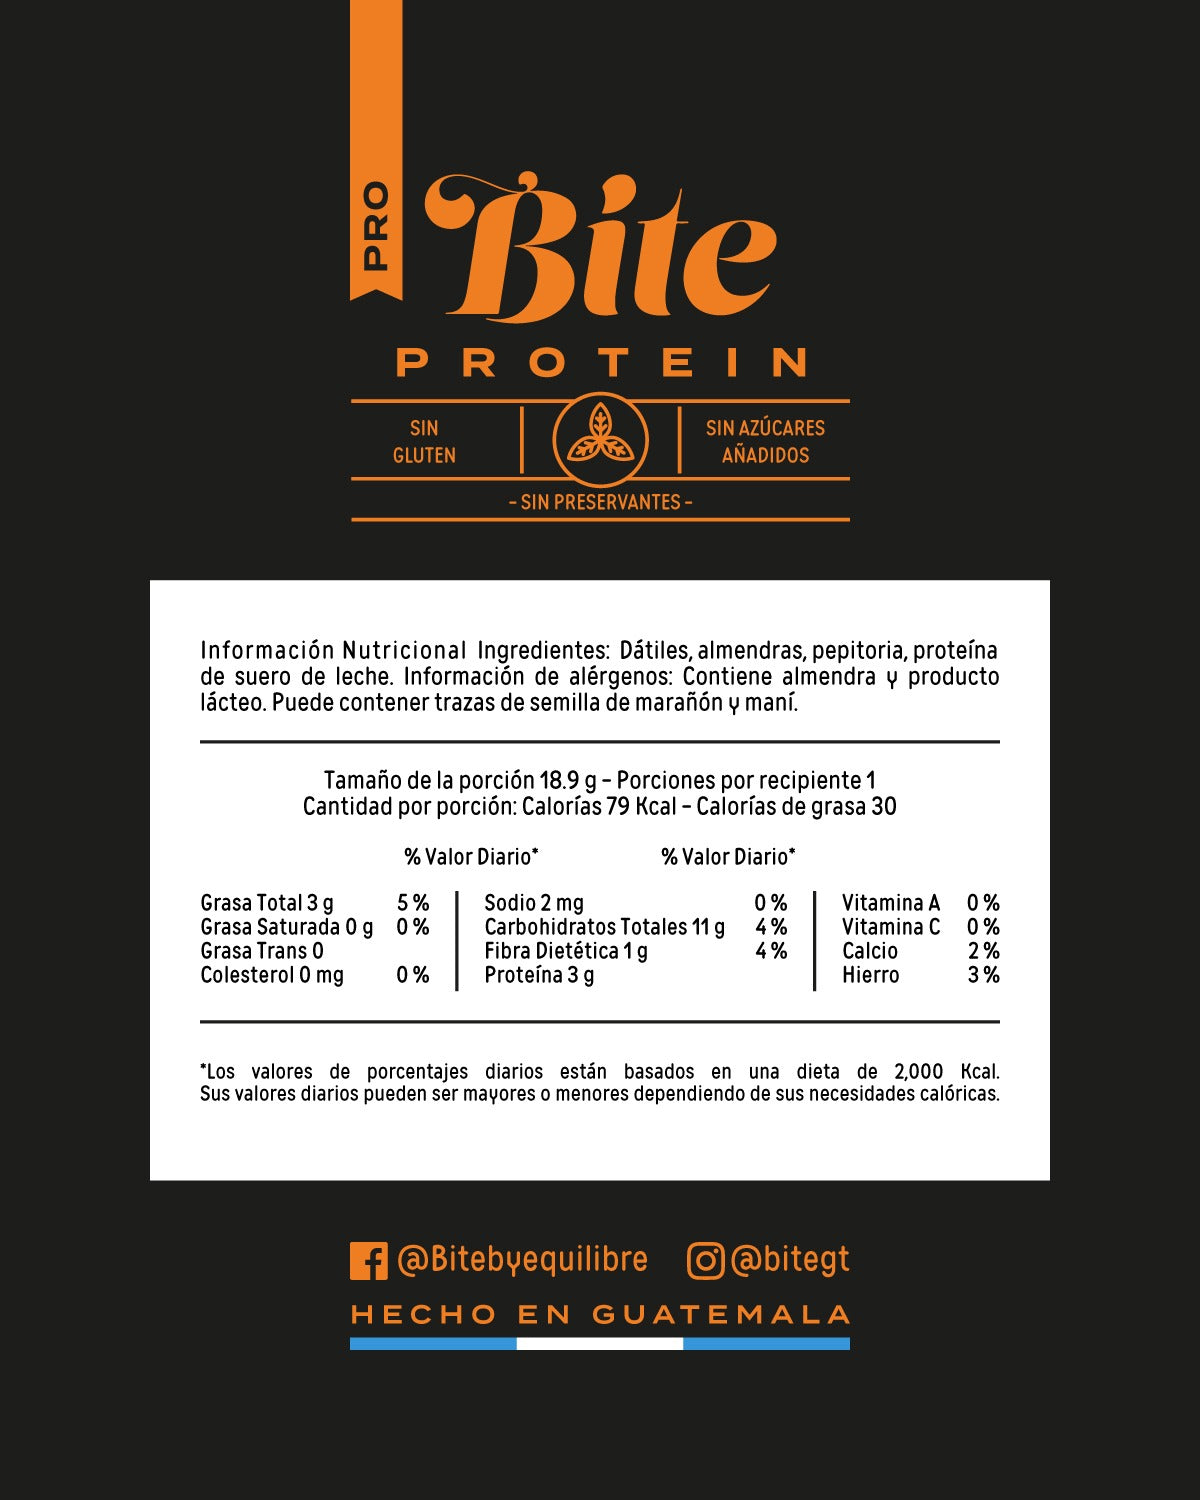 Mini Bite Pro Protein